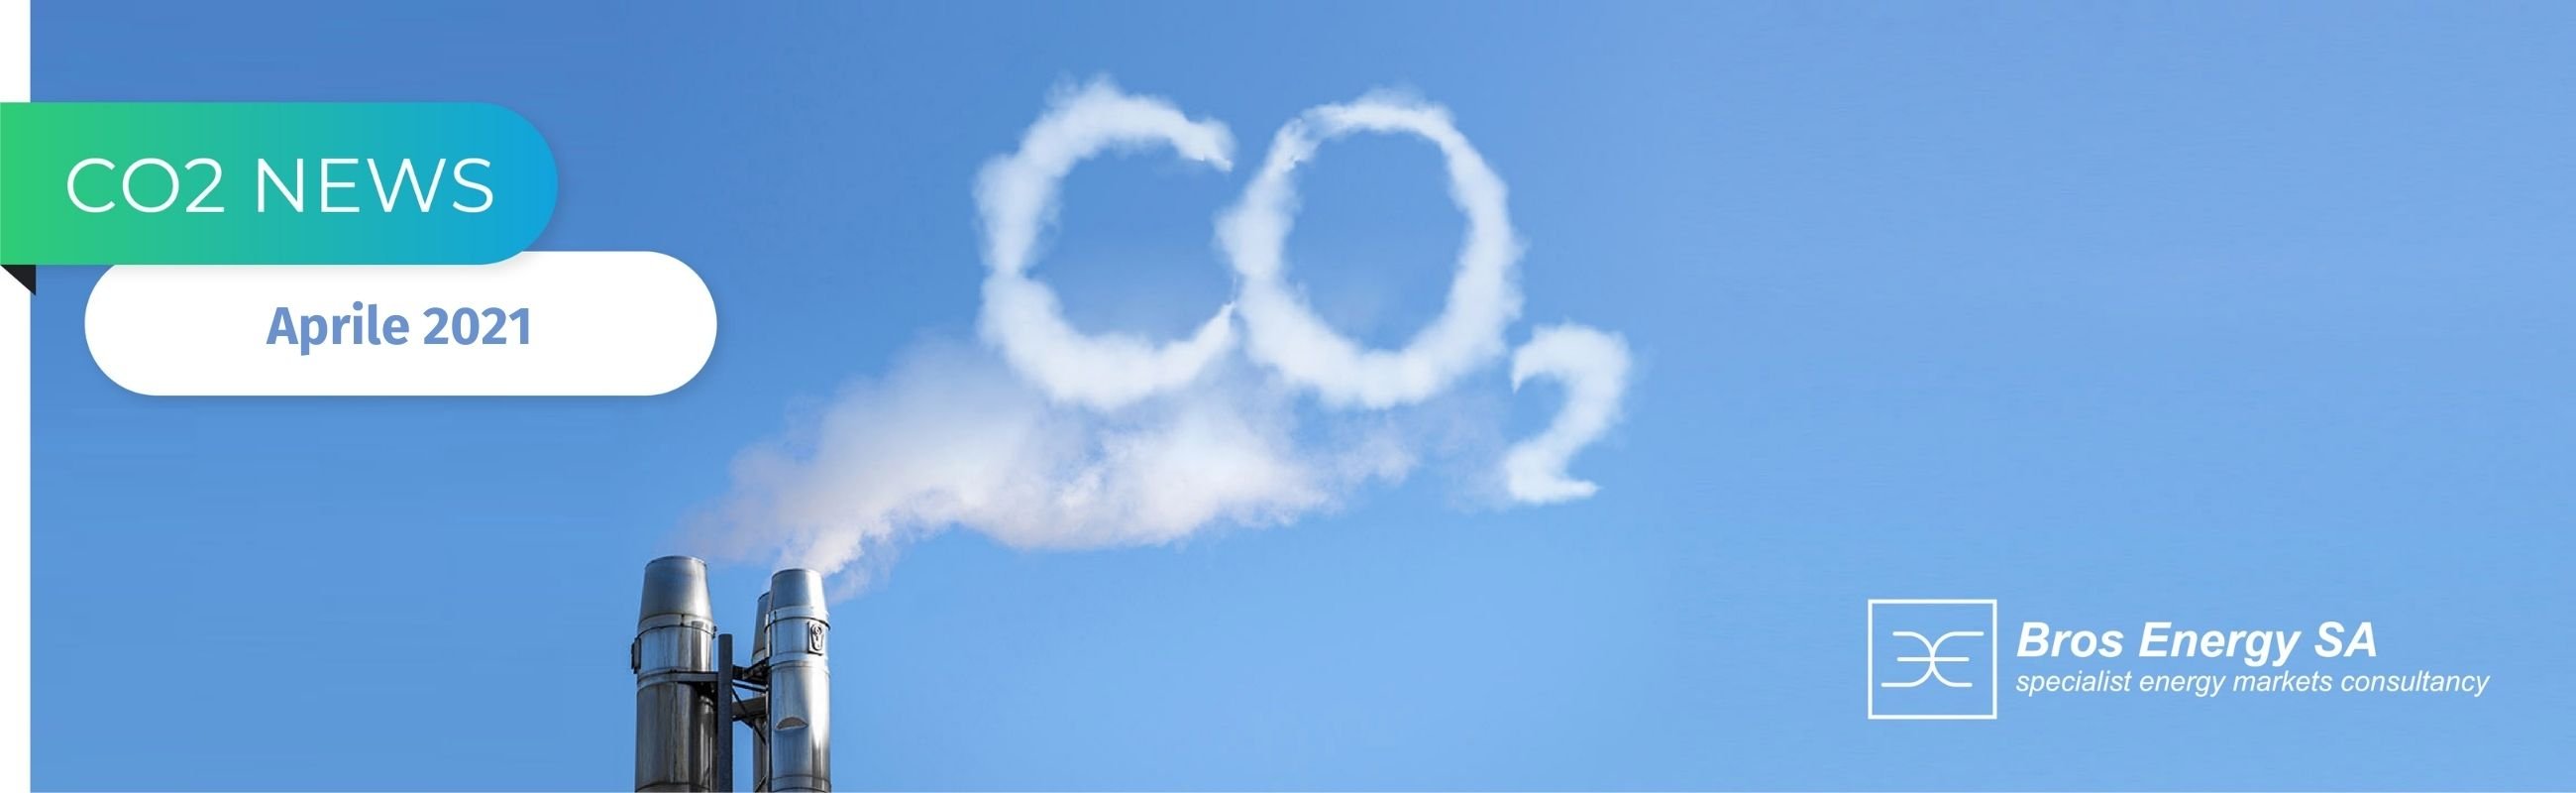 IT-CO2 news-DETAIL (1)